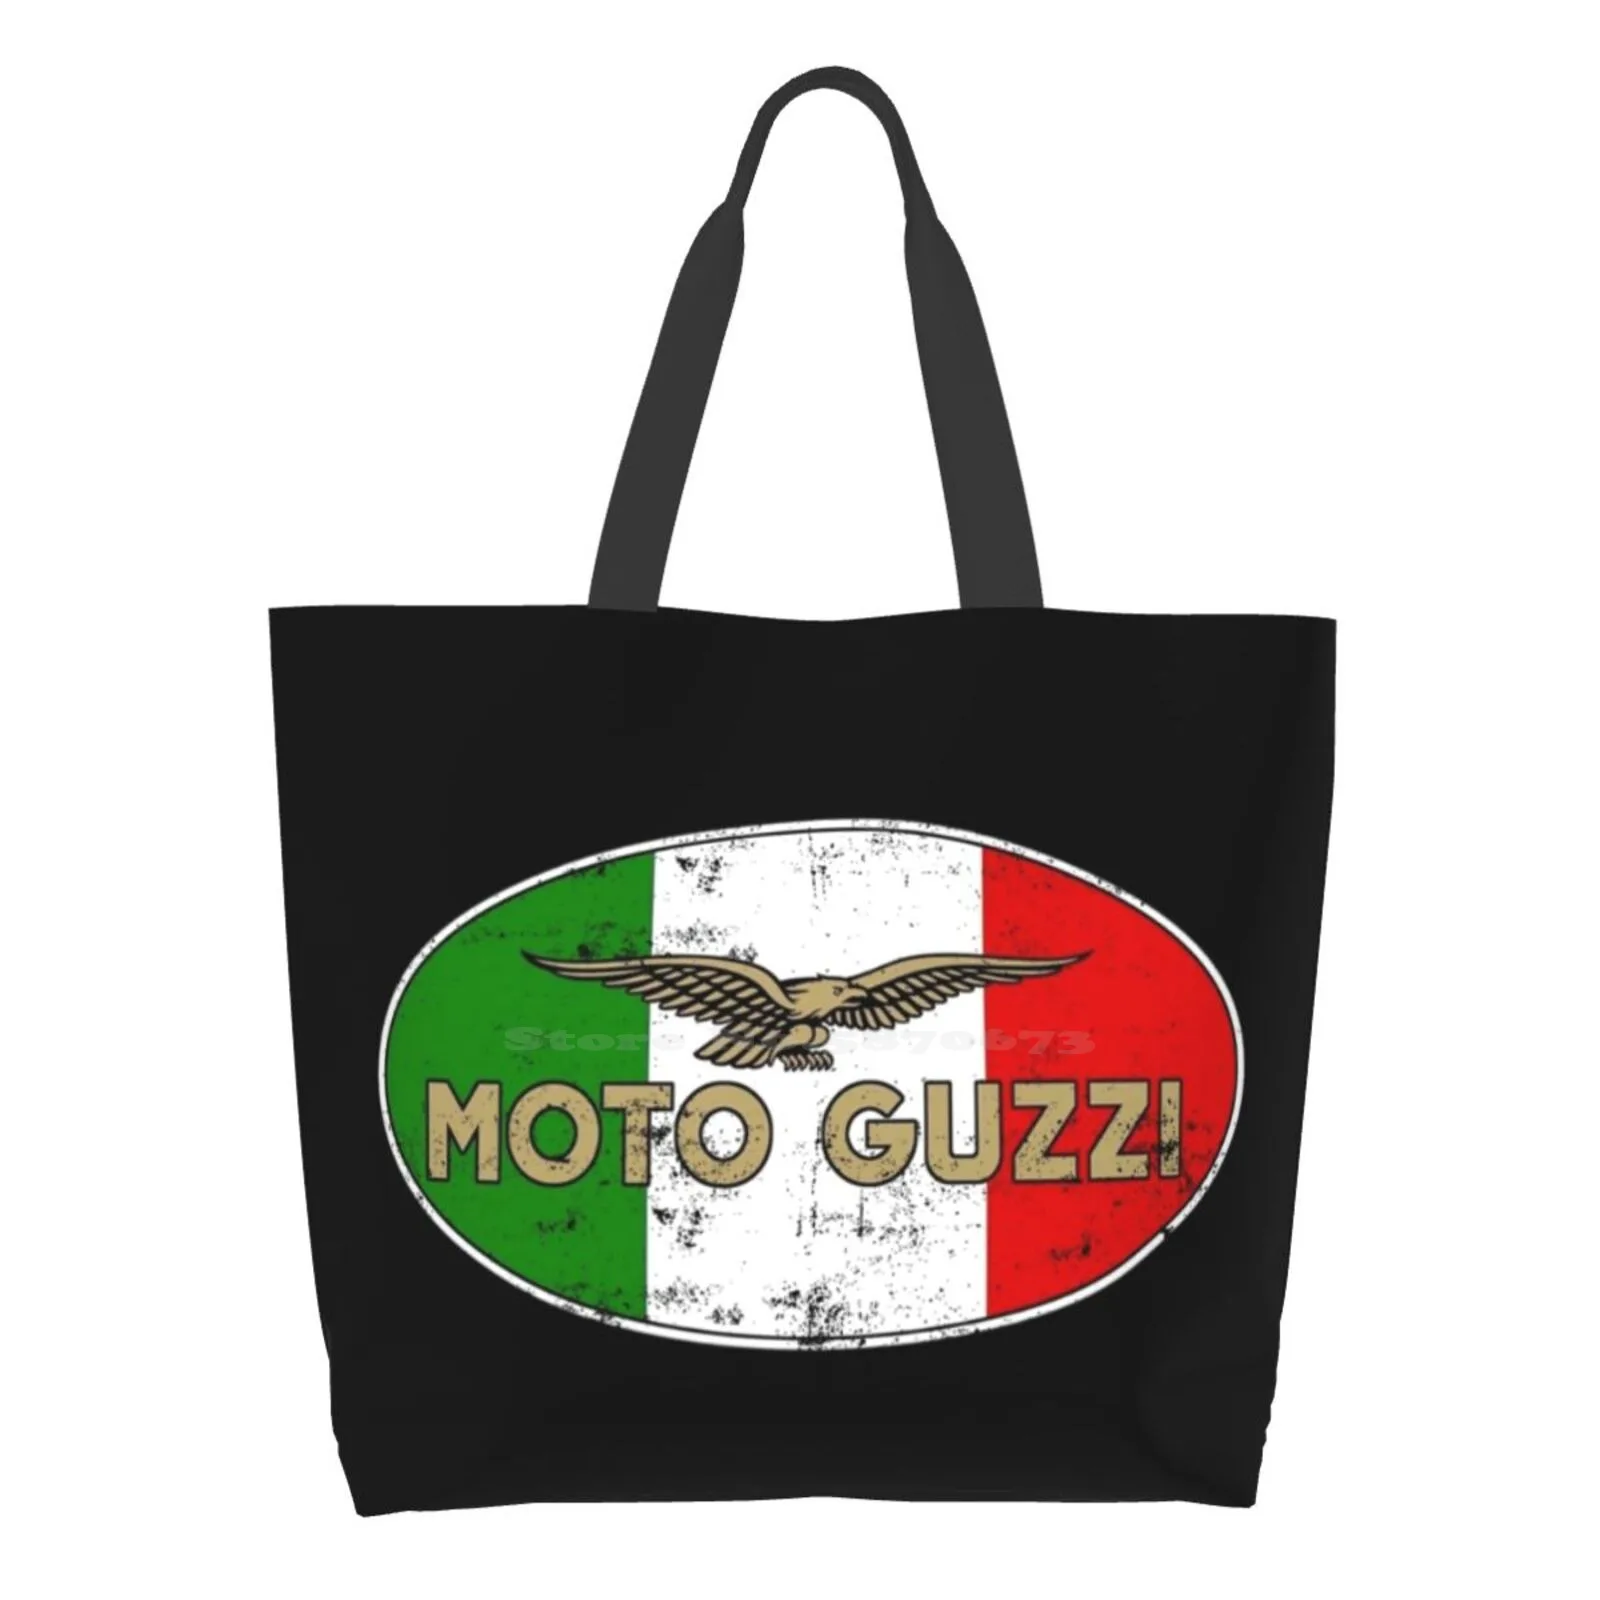 Moto Guzzi - Vintage Classic Motorcycle Logo Reusable Shopping Bag Tote Large Size Diavel Motorcycle Life Trendy Guzzisti